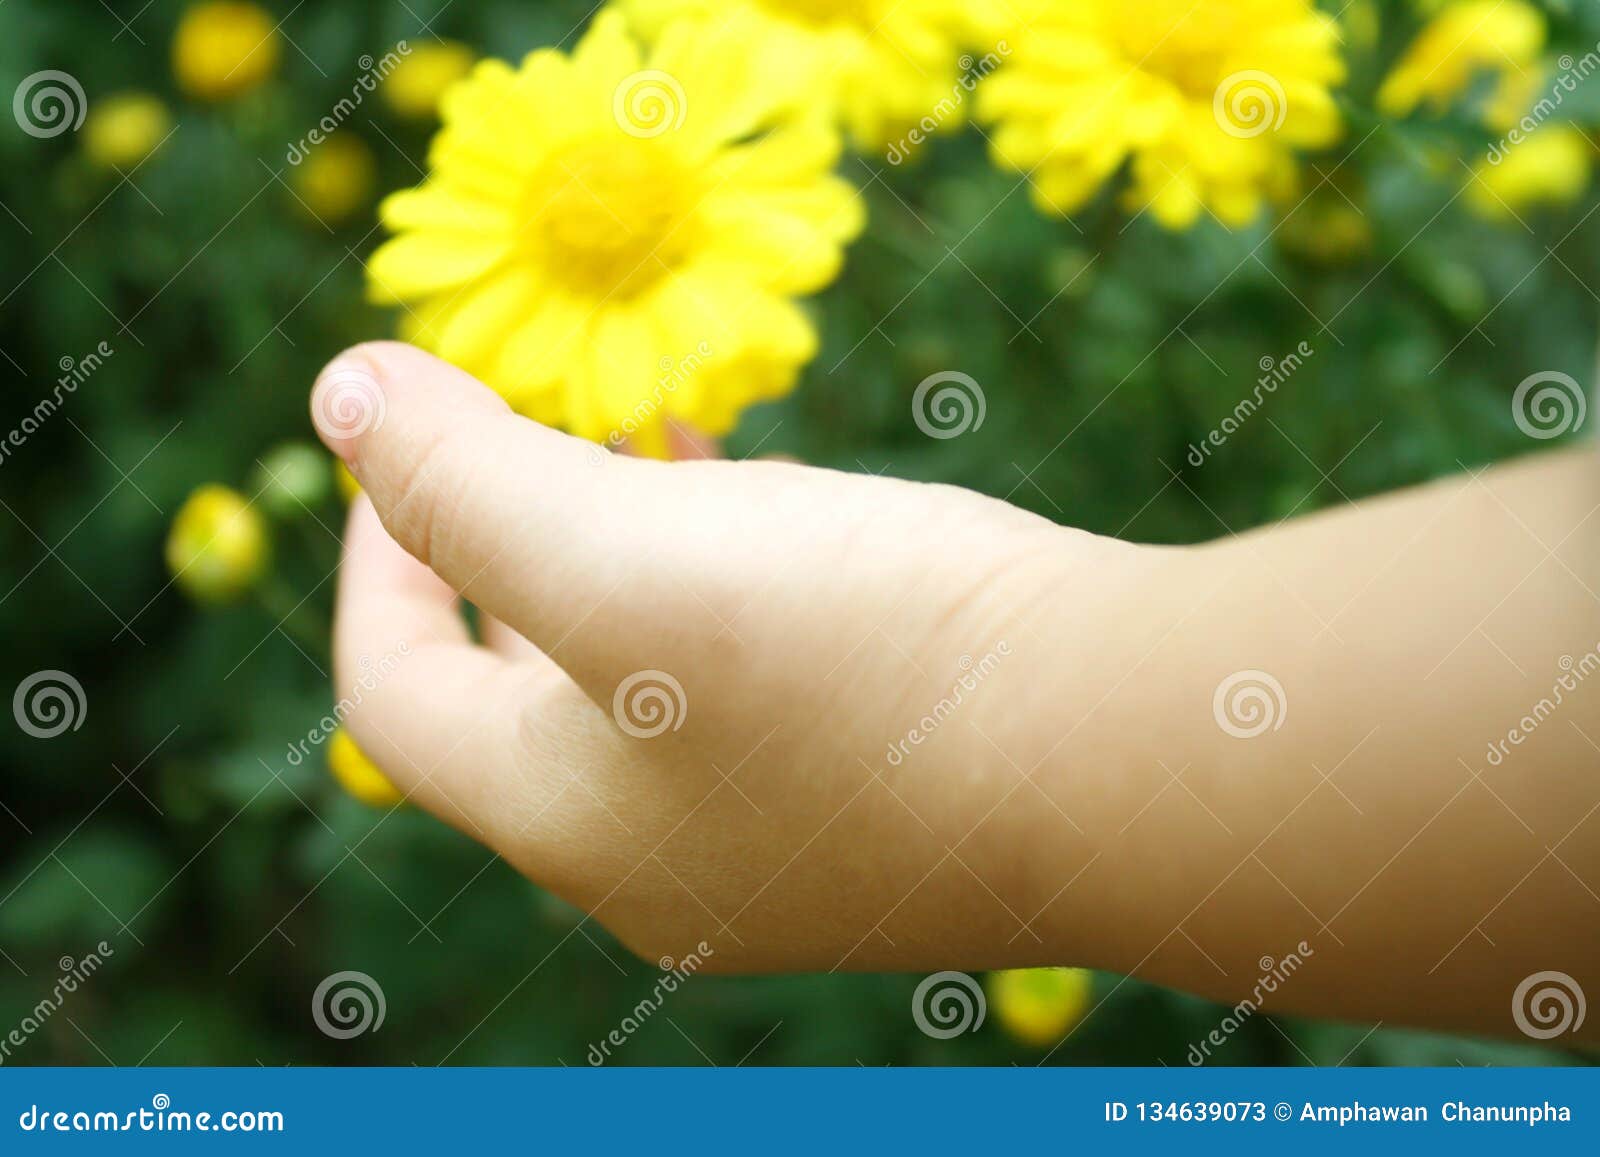 Baby Girl Touching Yellow Flower by Left Hand Immagine Stock - Immagine ...